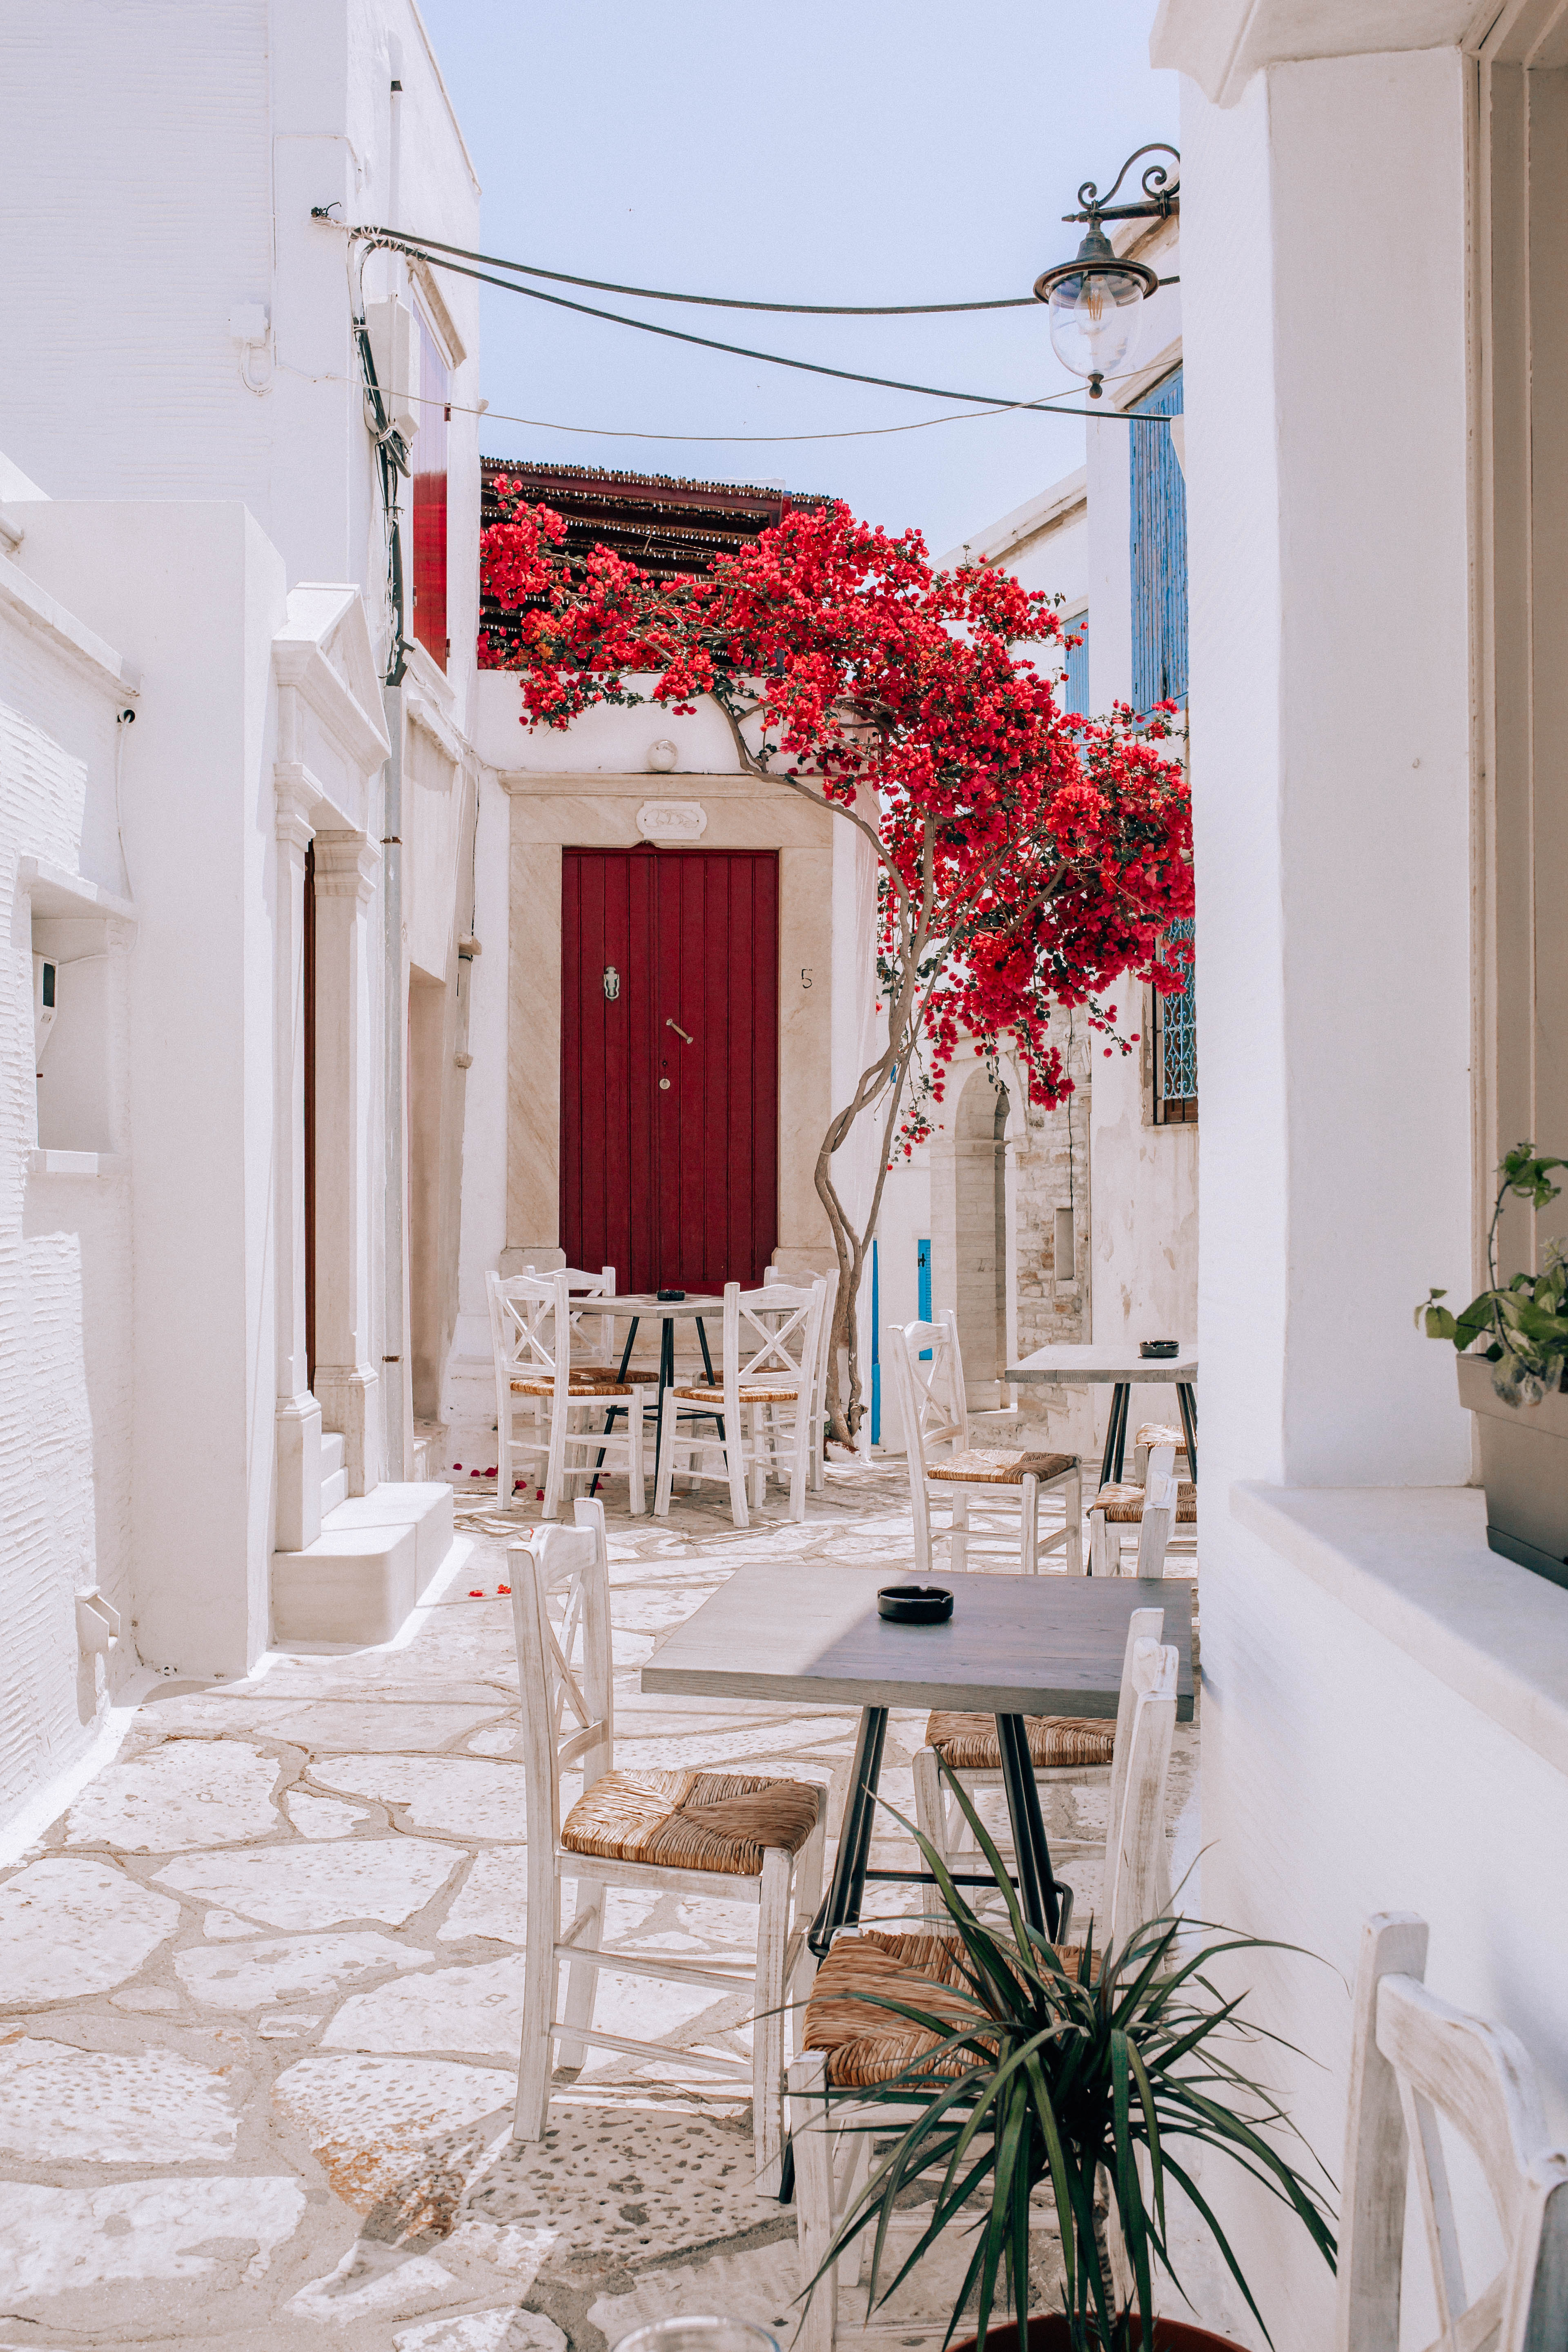 3 Days on the Greek Island Tinos